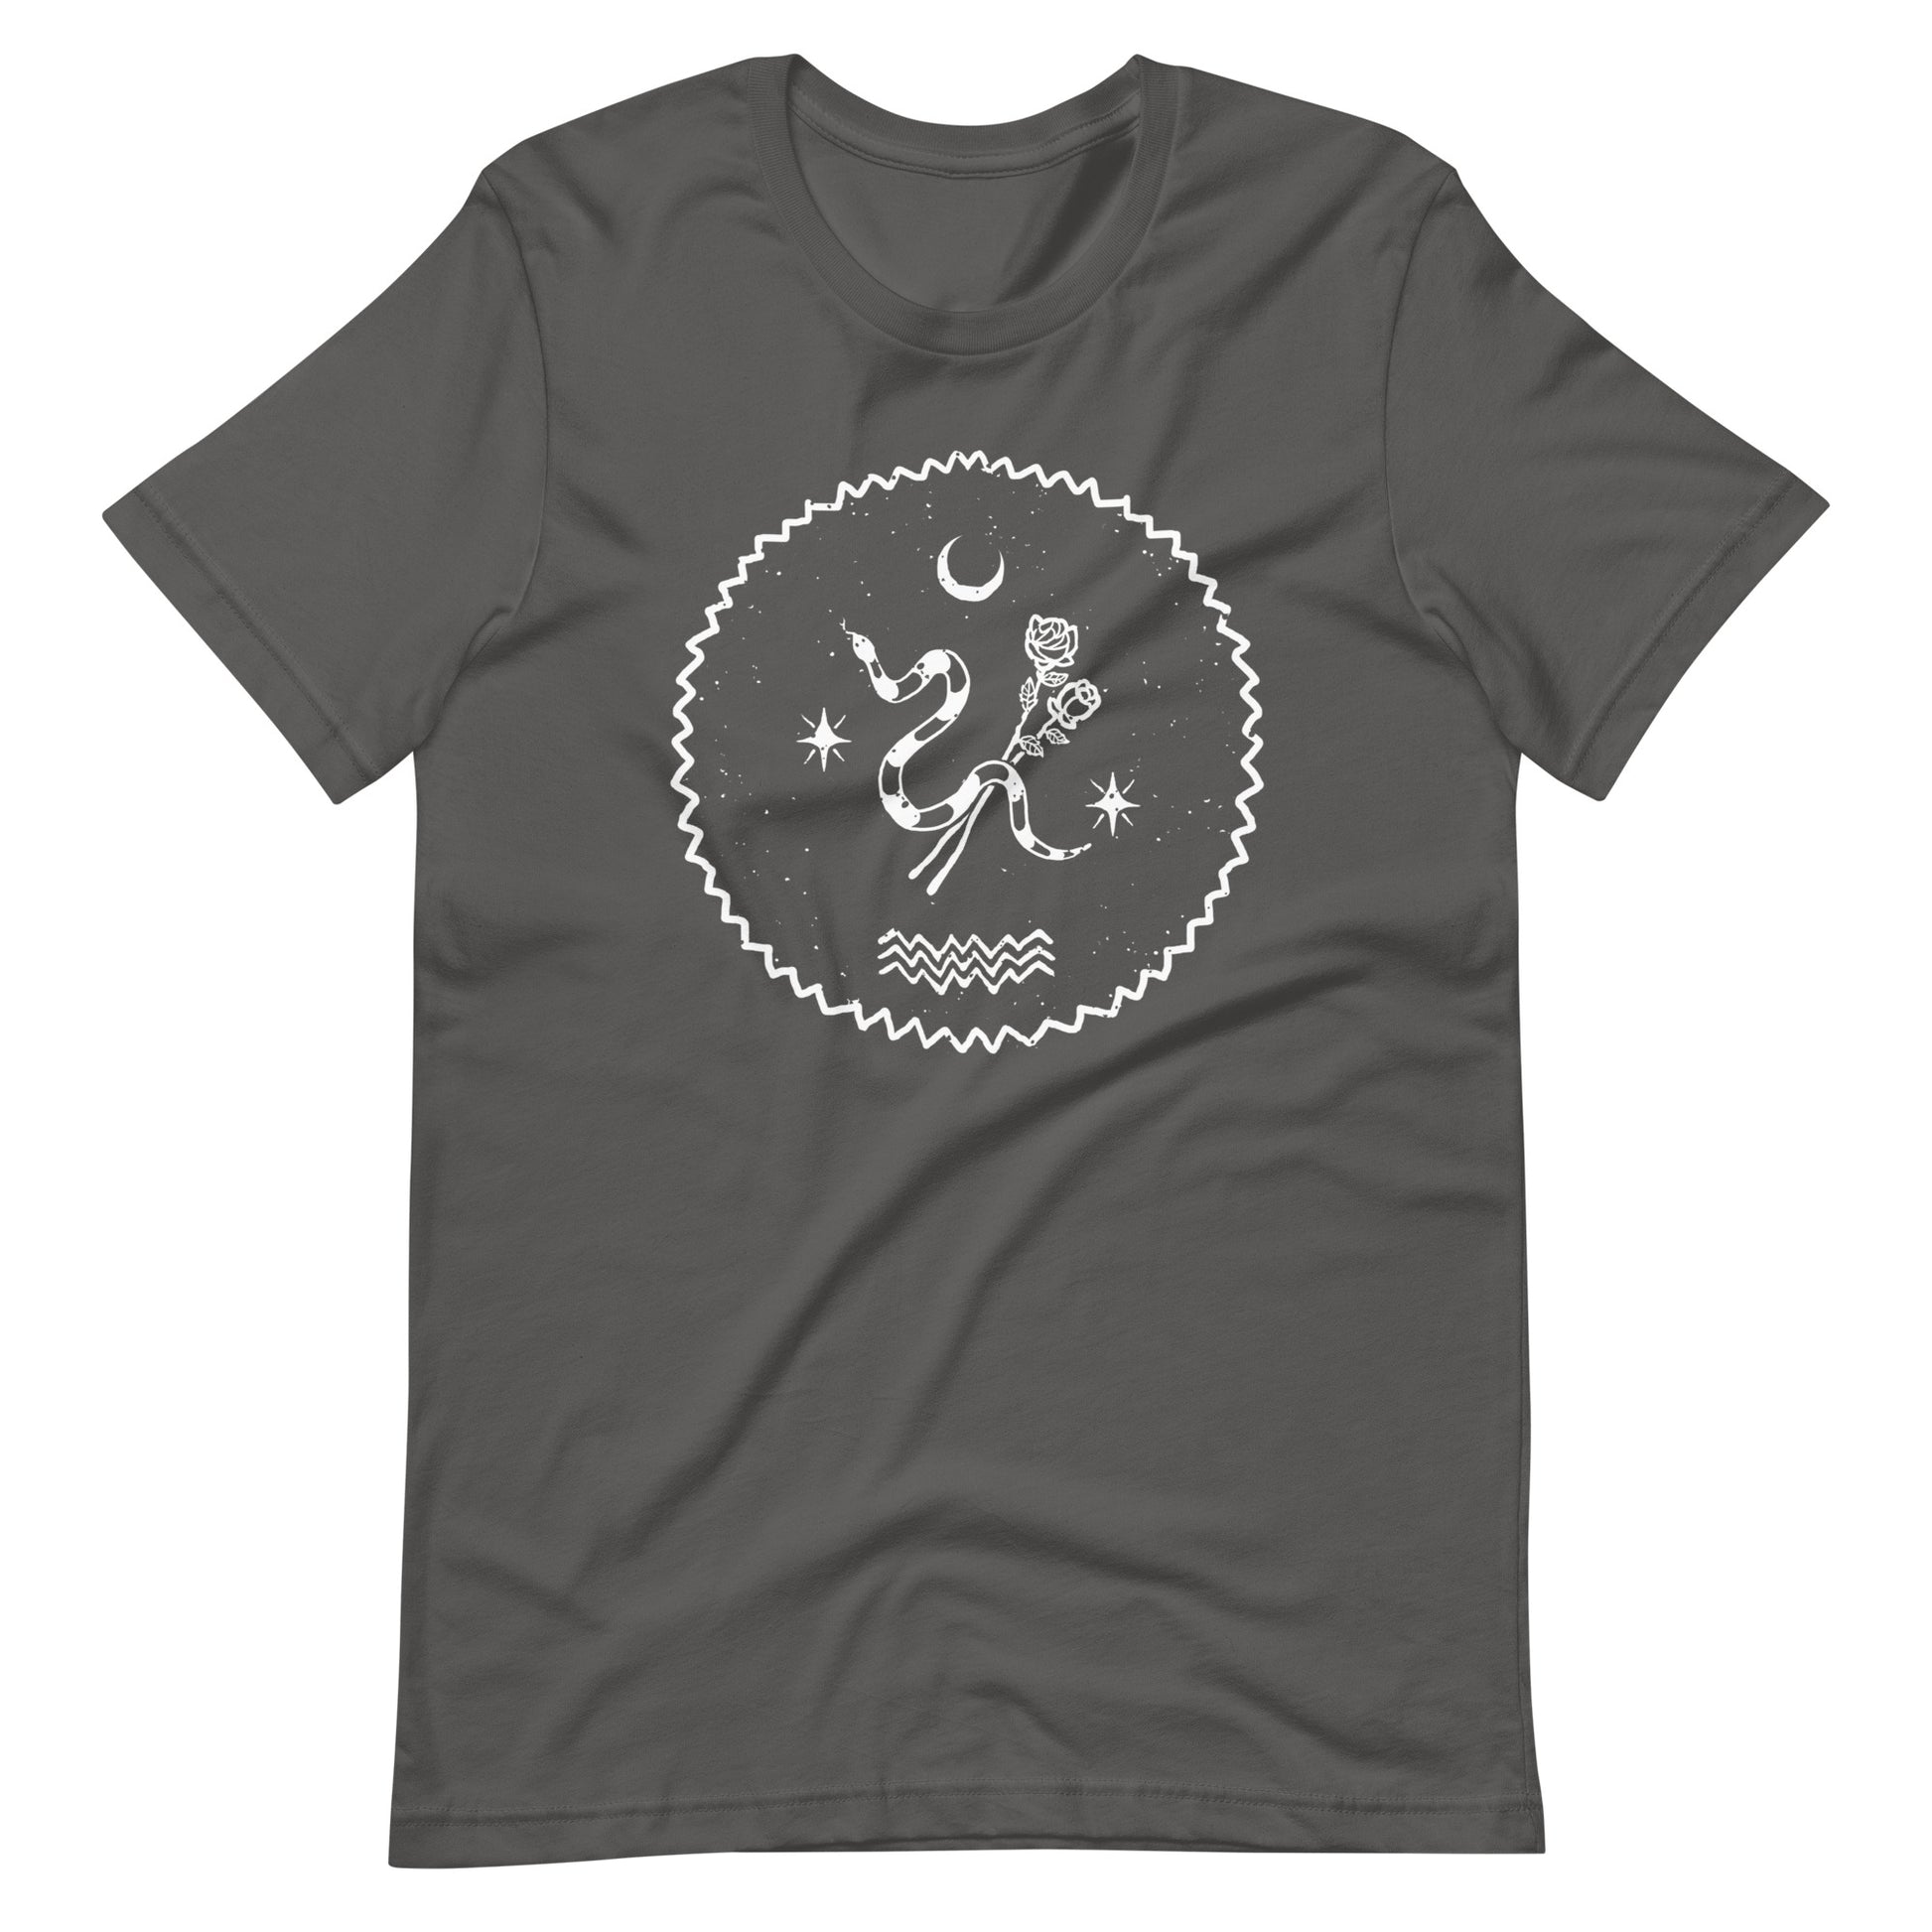 Scented Poison - Men's t-shirt - Asphalt Front